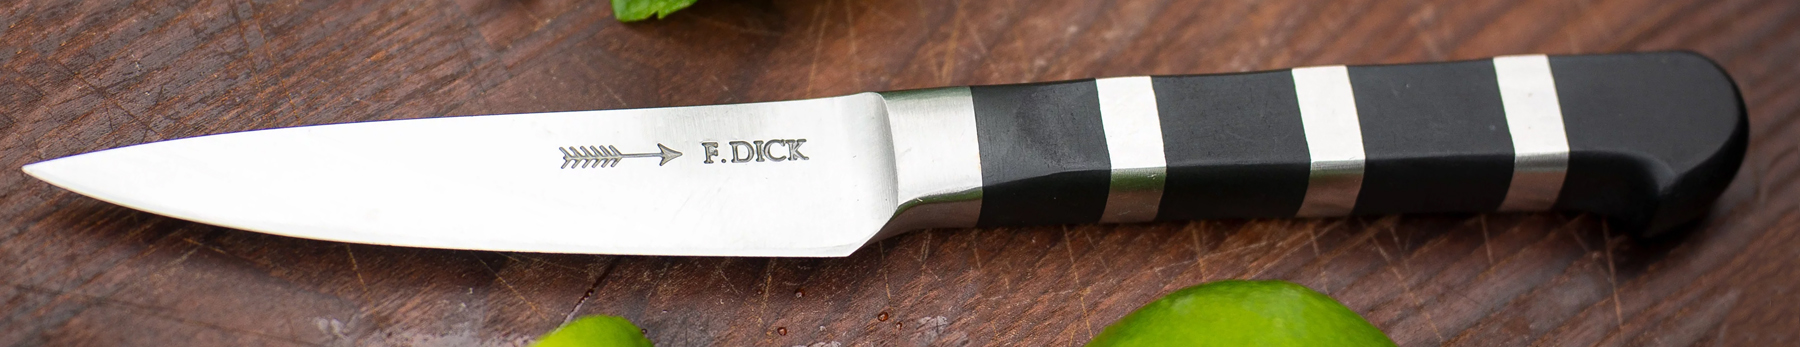 FDick 1905 series paring knife